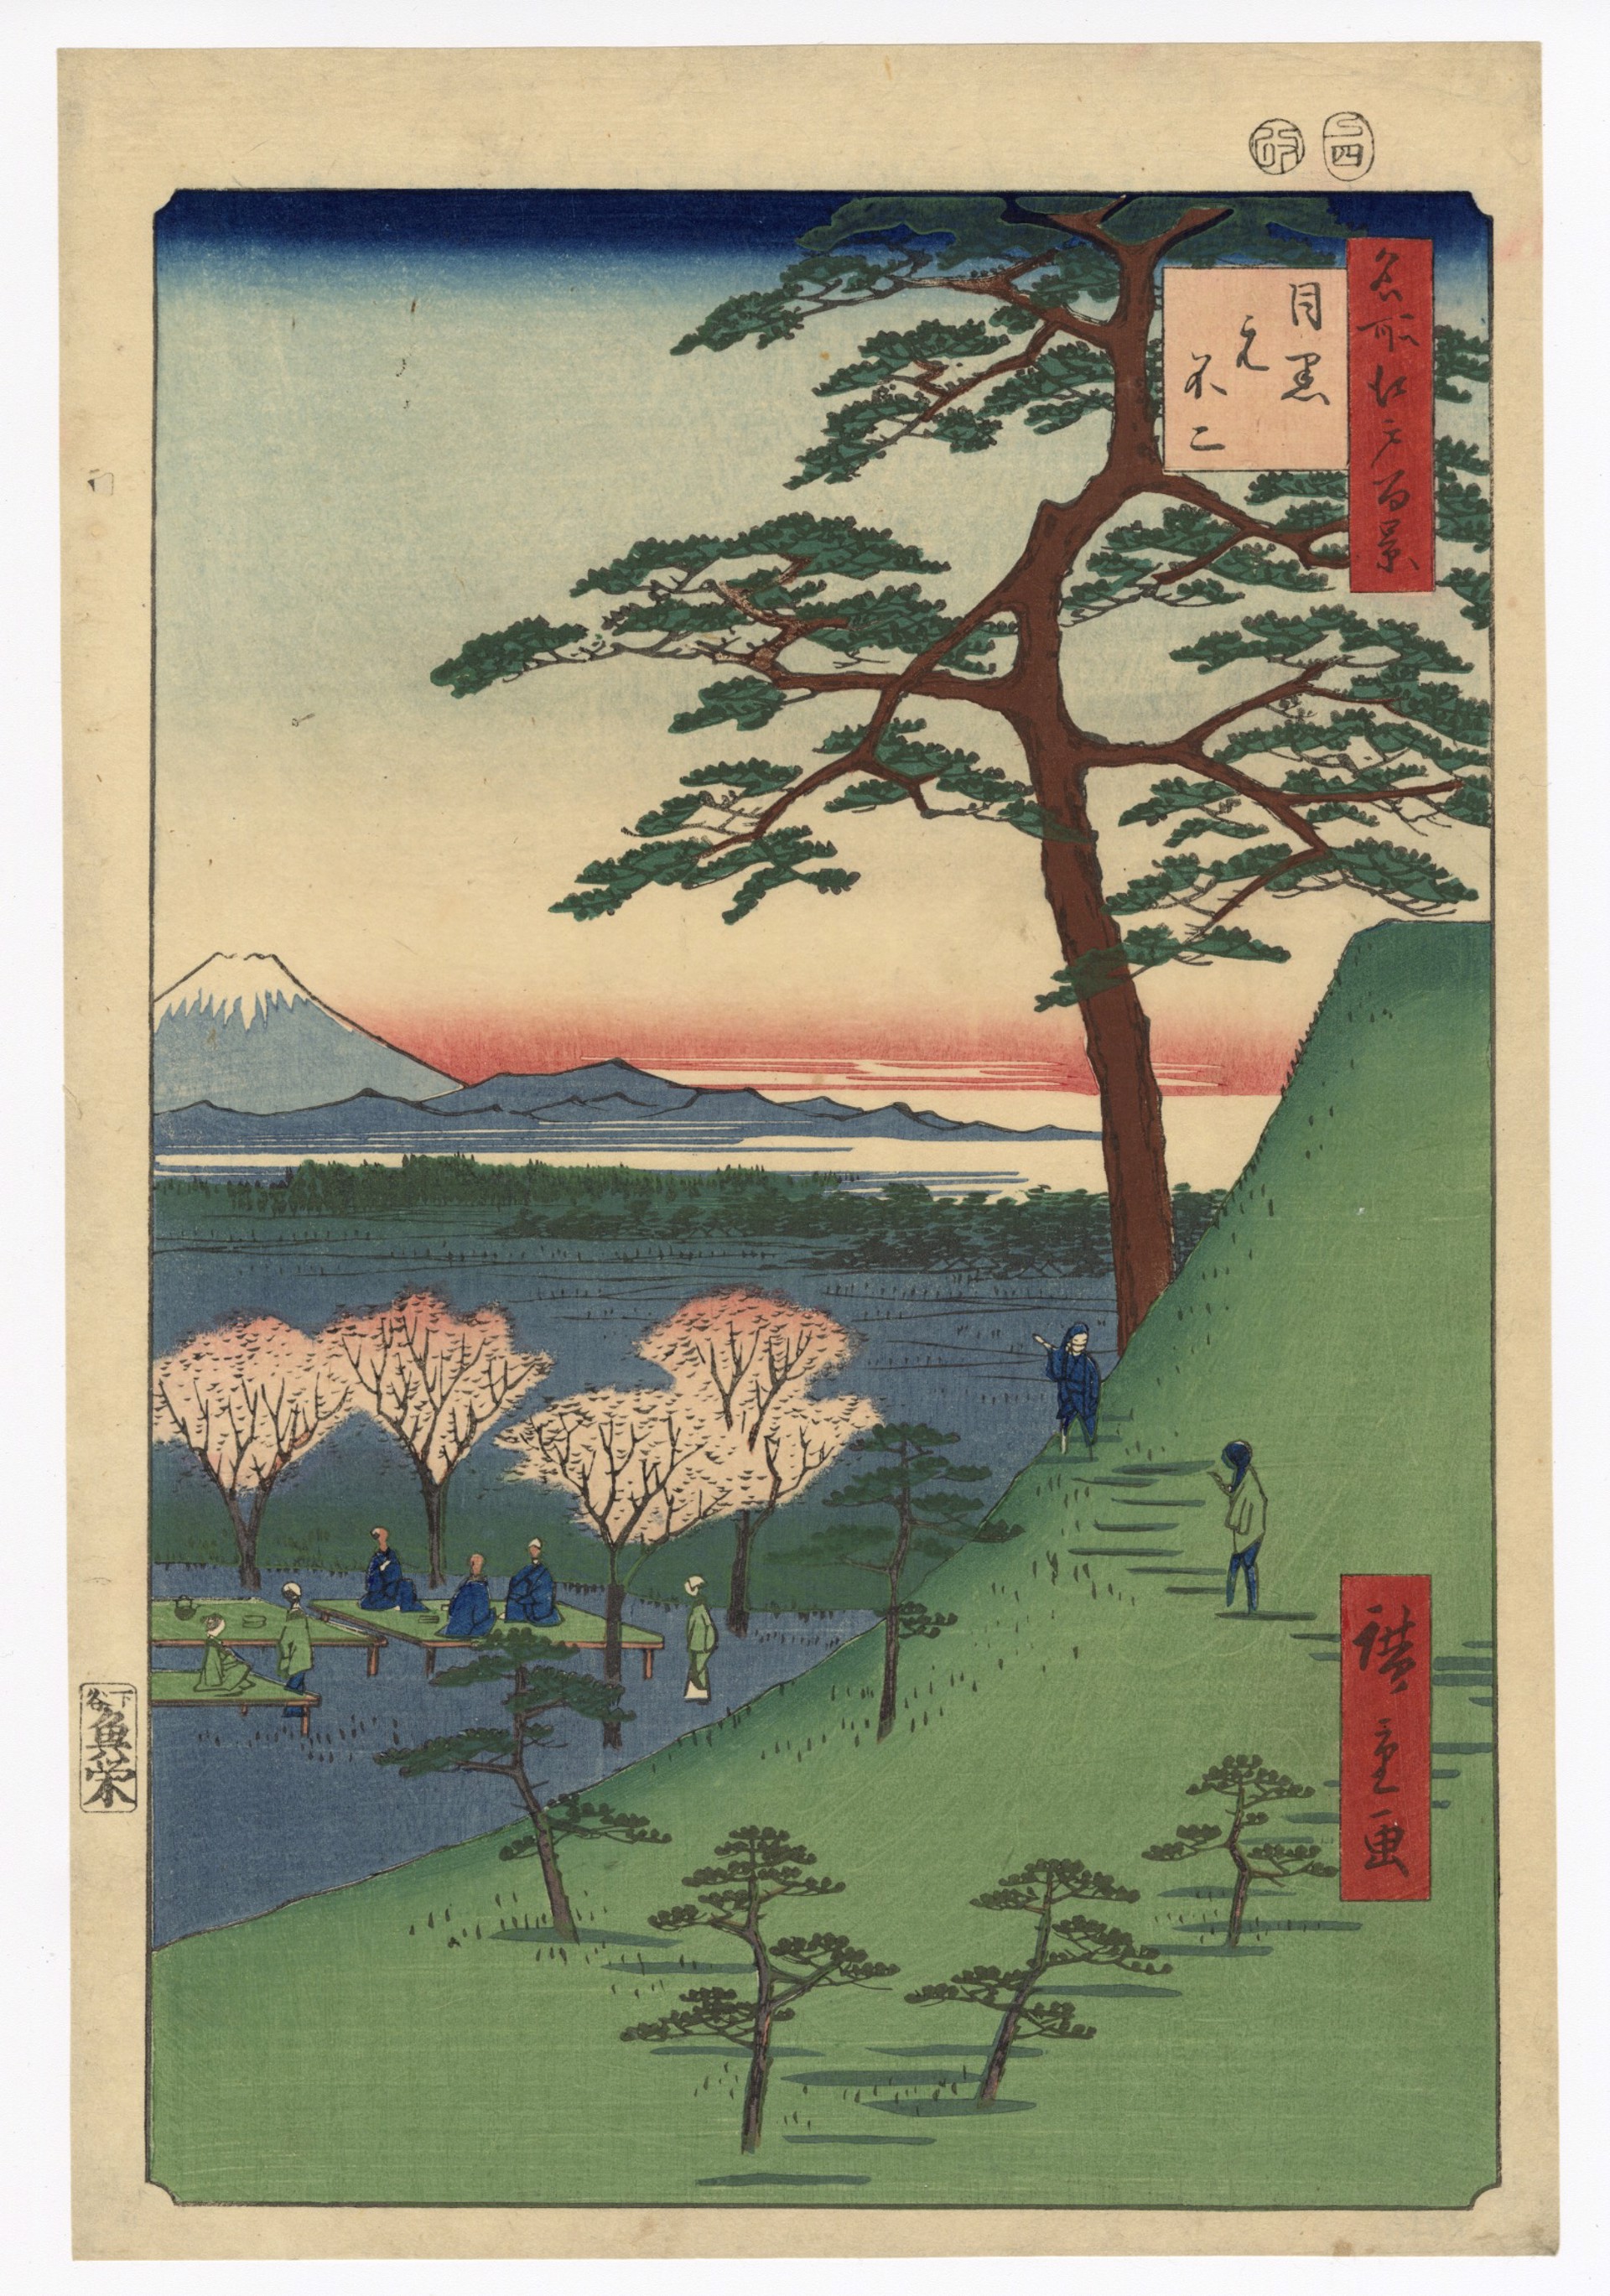 The Old Fuji at Meguro by Hiroshige